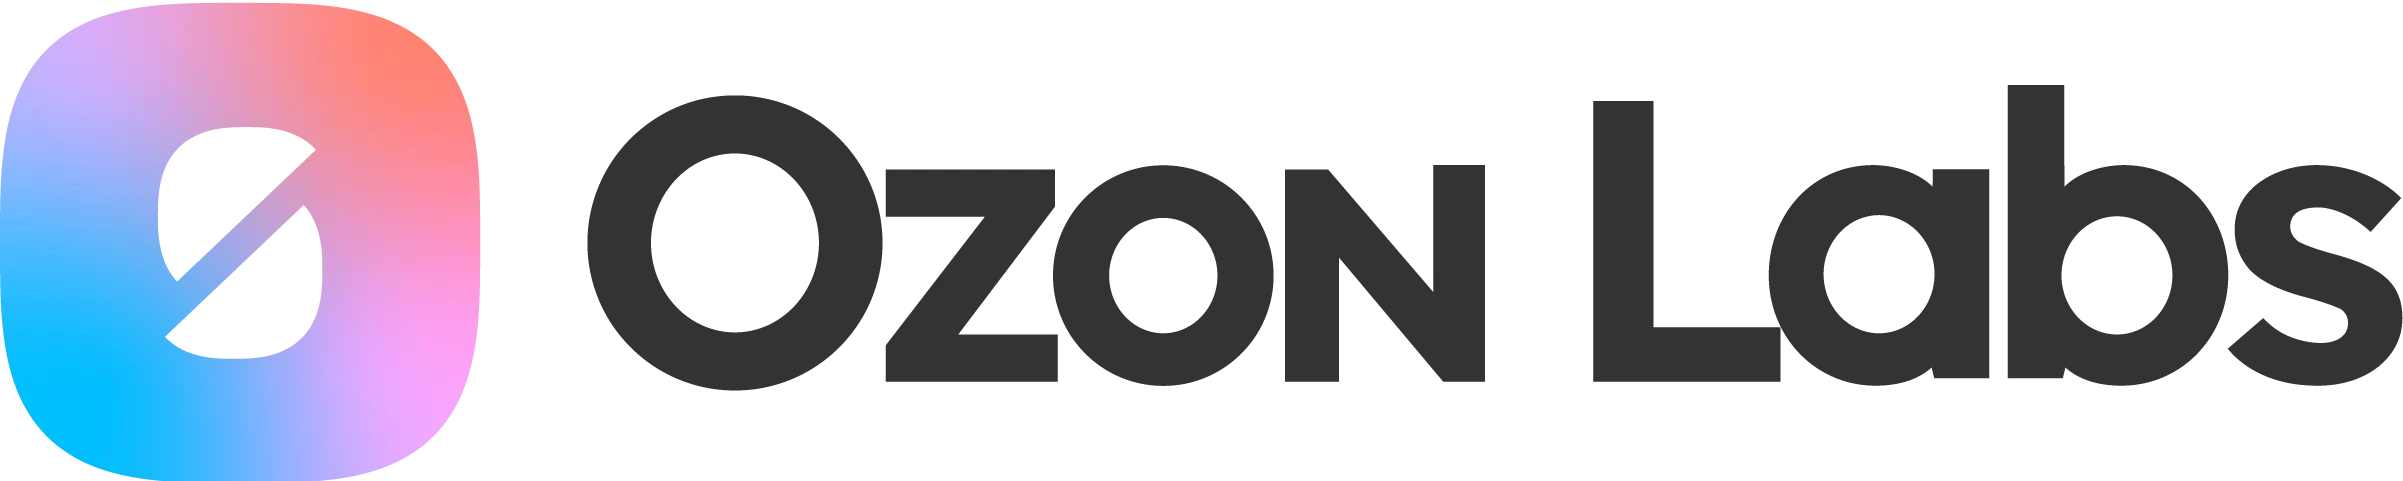 ozonlabs logo